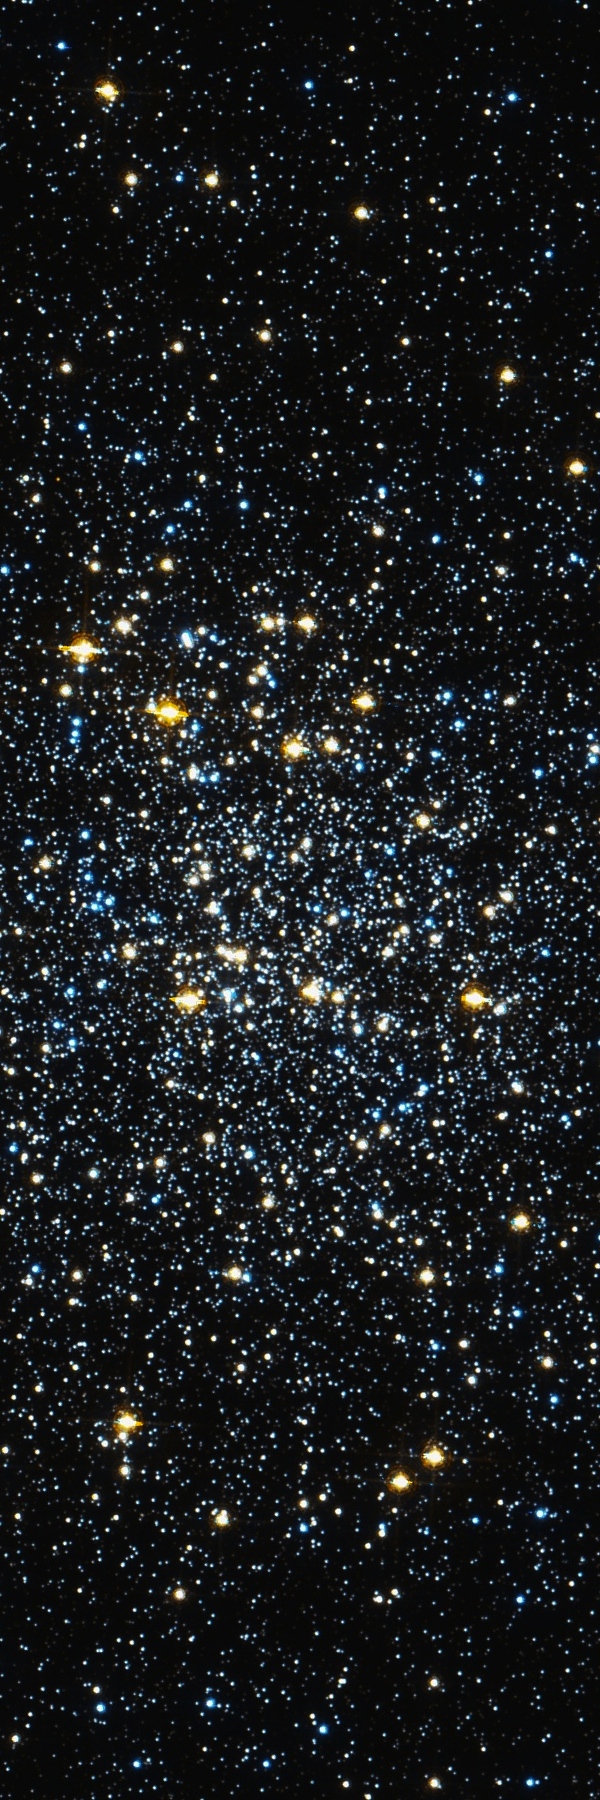 Image credit: NASA, ESA and the Hubble Space Telescope / STScI / WFPC2.